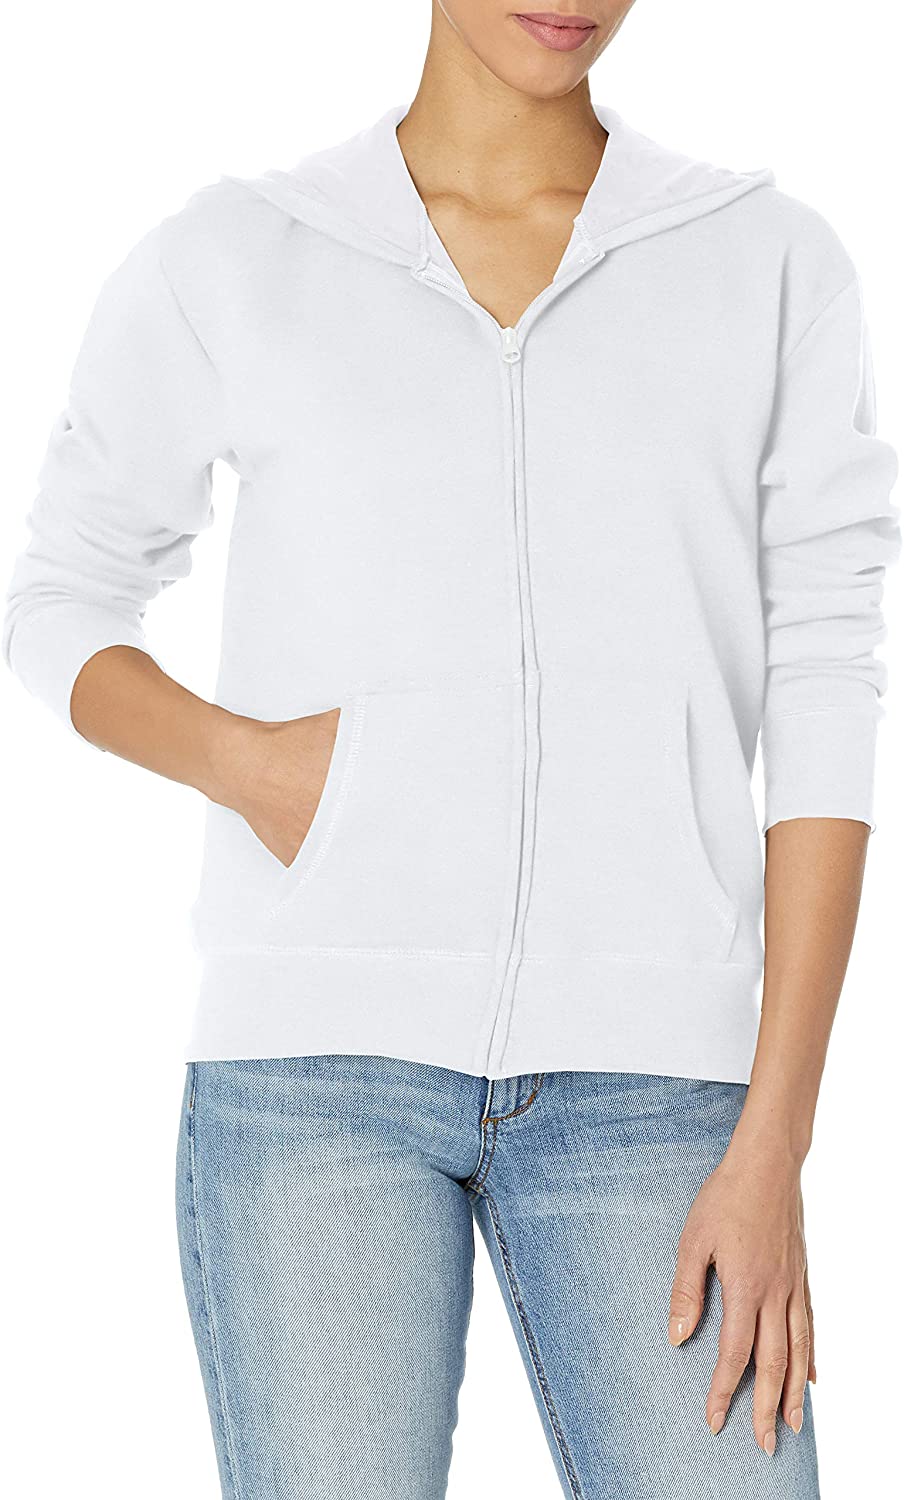 Hanes Women's Full-Zip Hooded Jacket | eBay